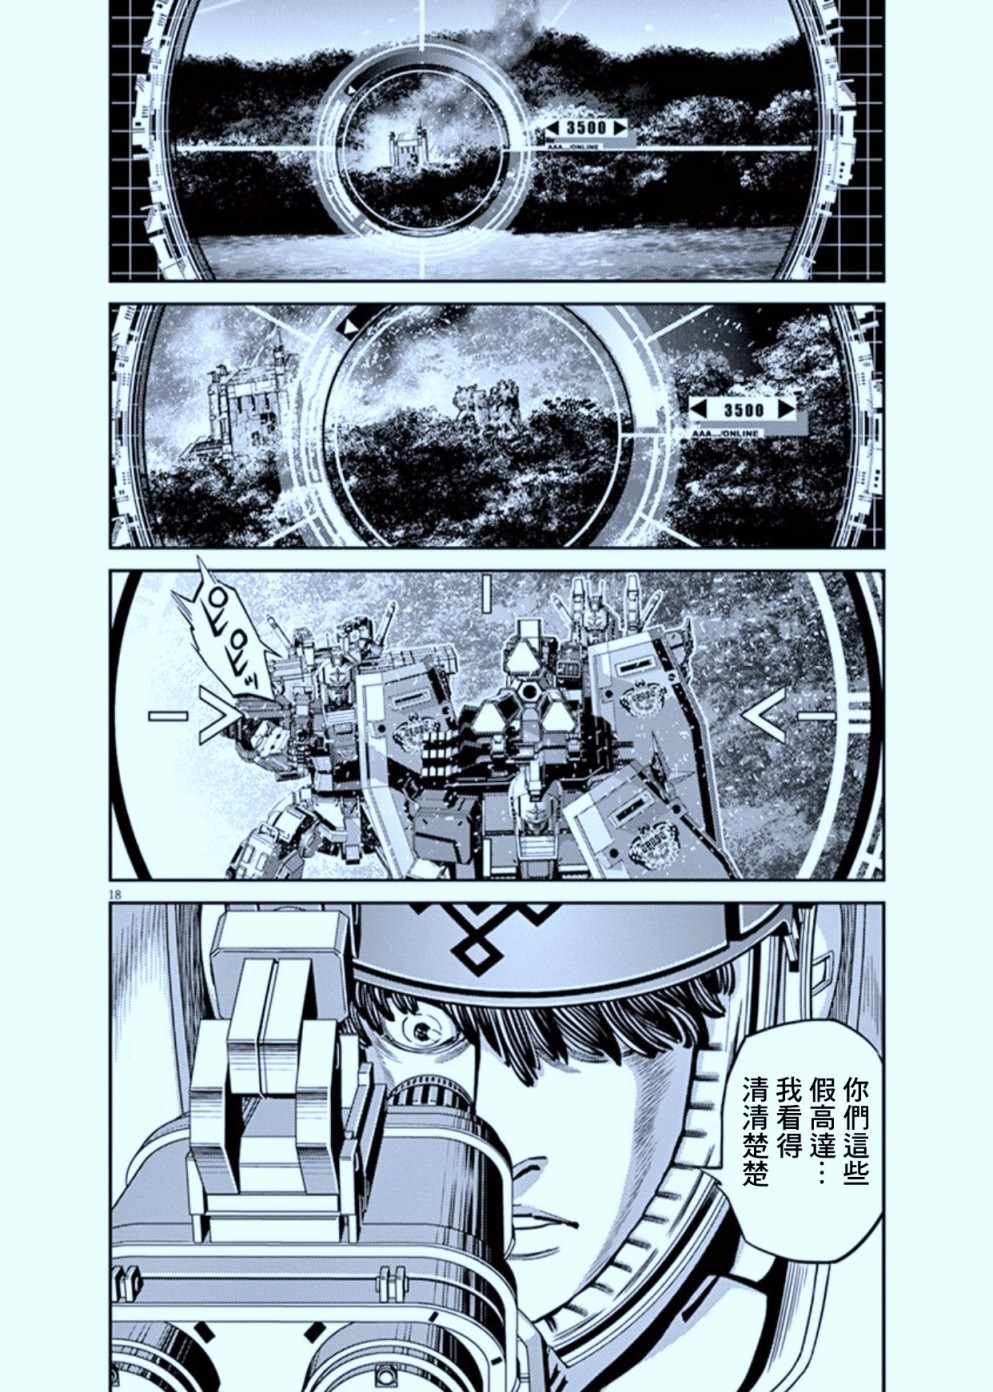 《机动战士高达THUNDERBOLT》漫画 THUNDERBOLT 105集